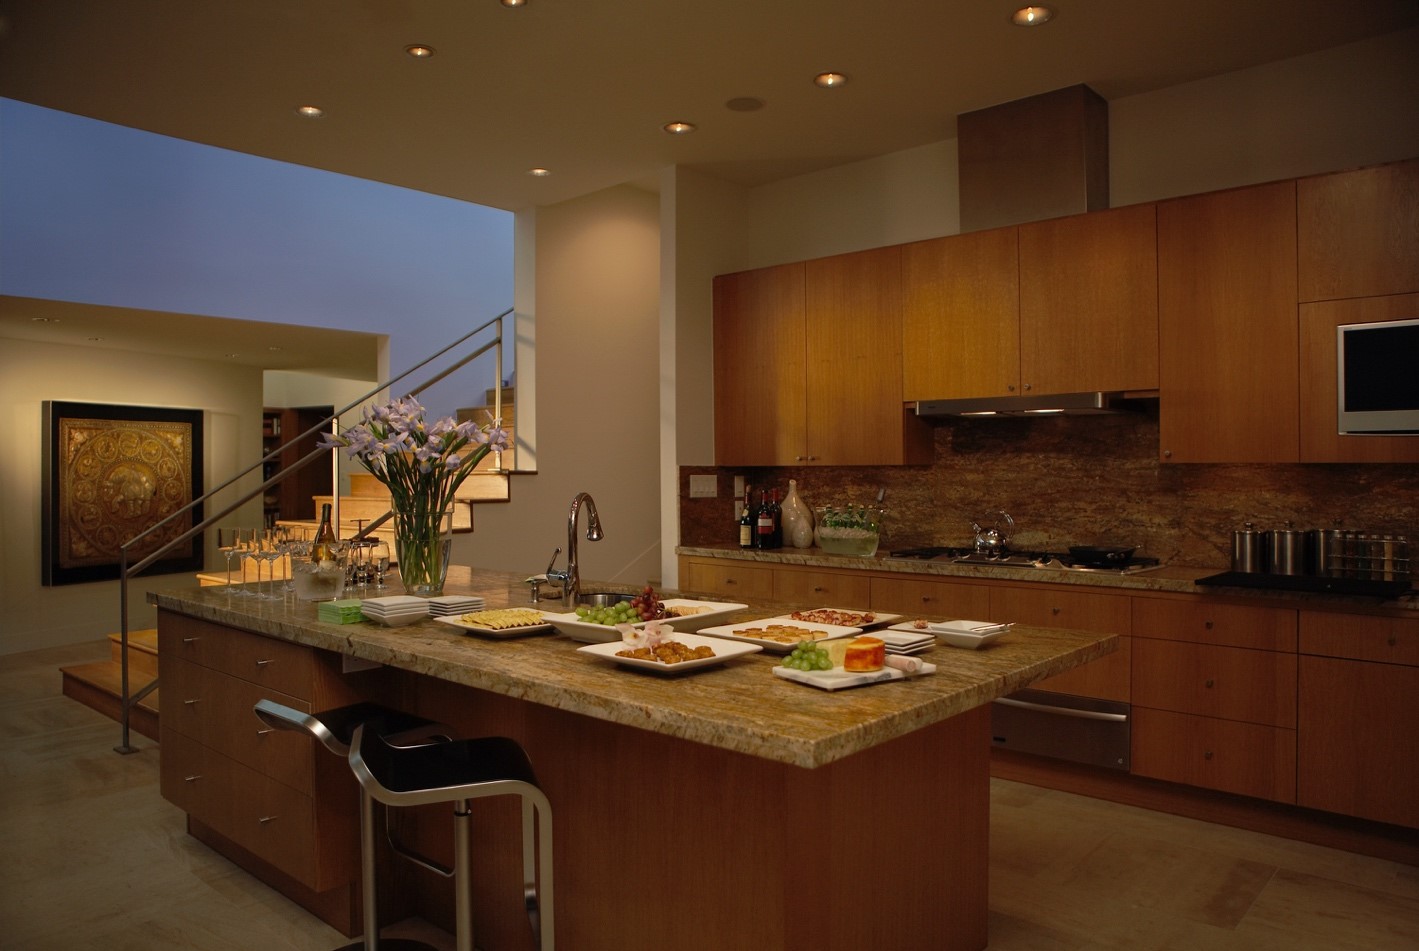 Enhance Interior Design with Smart Lighting Systems